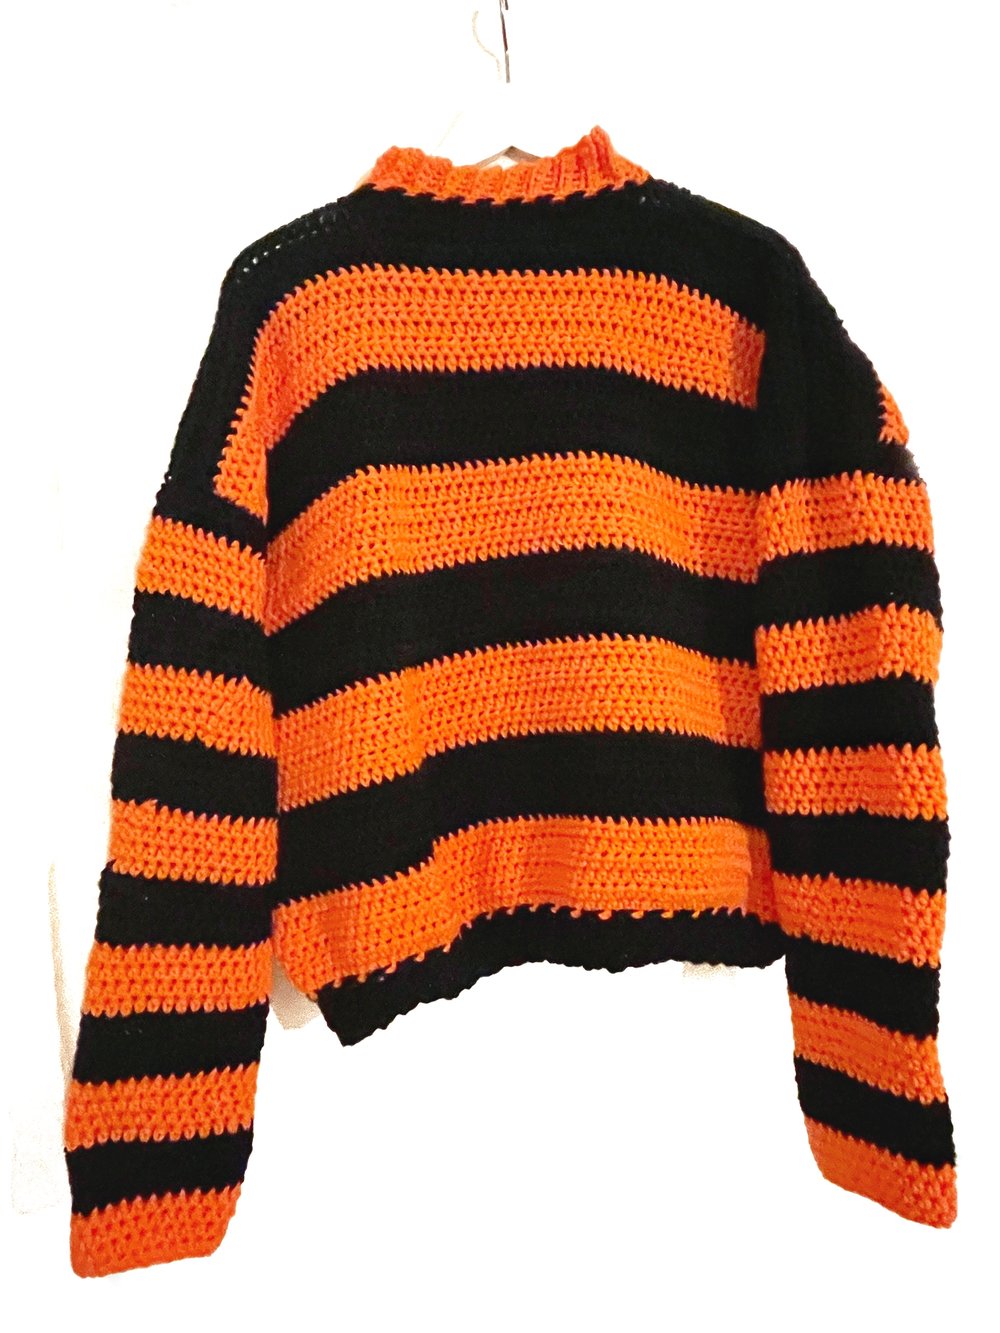 Monster Mash Sweater (1)